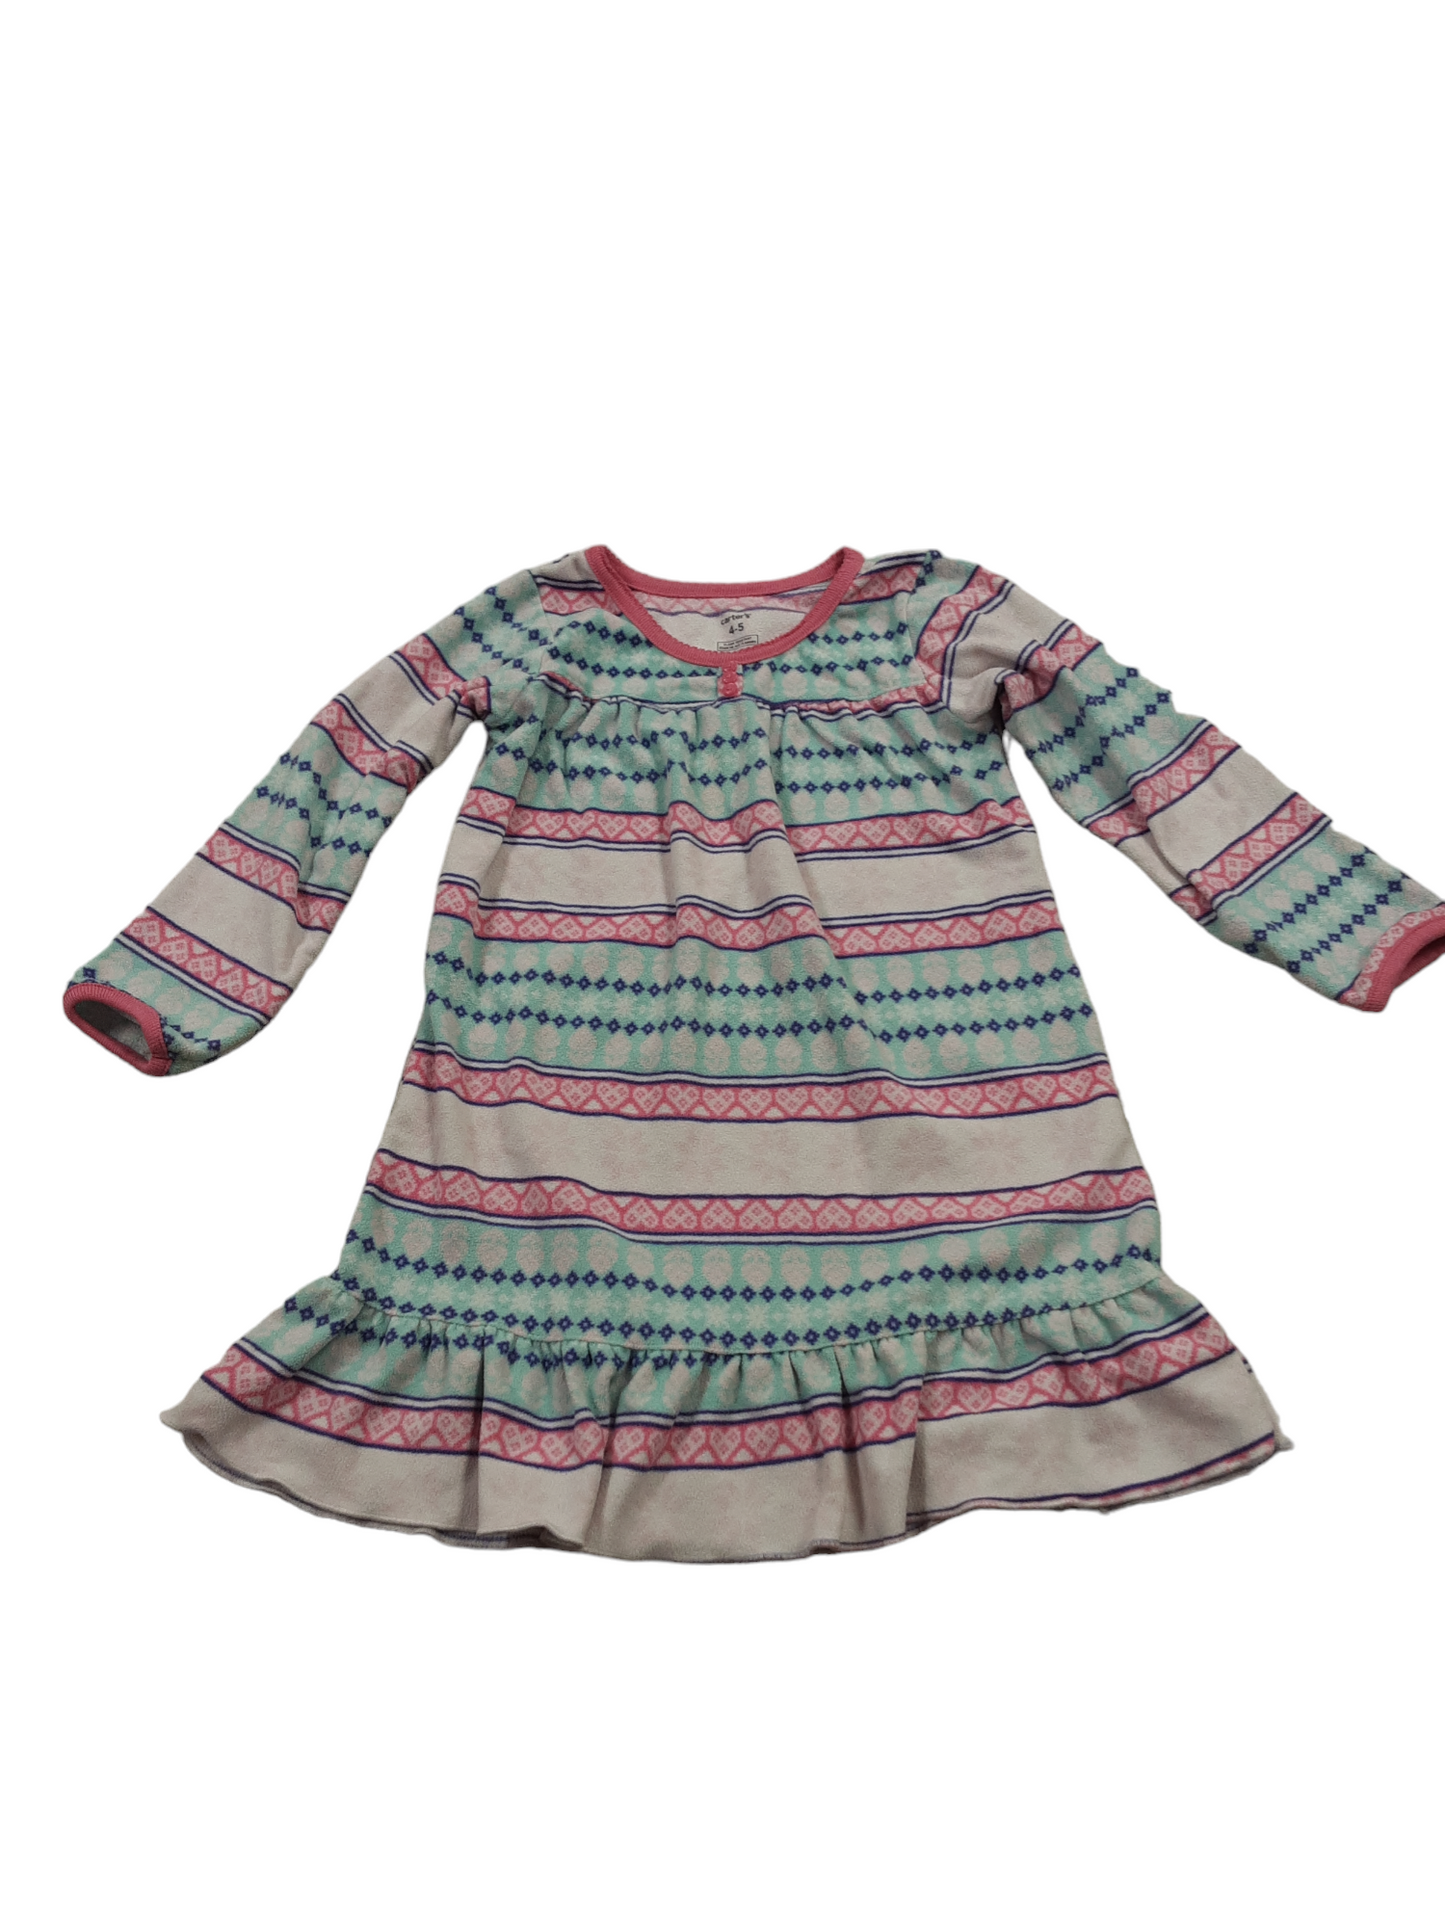 Fleece nightgown size4-5